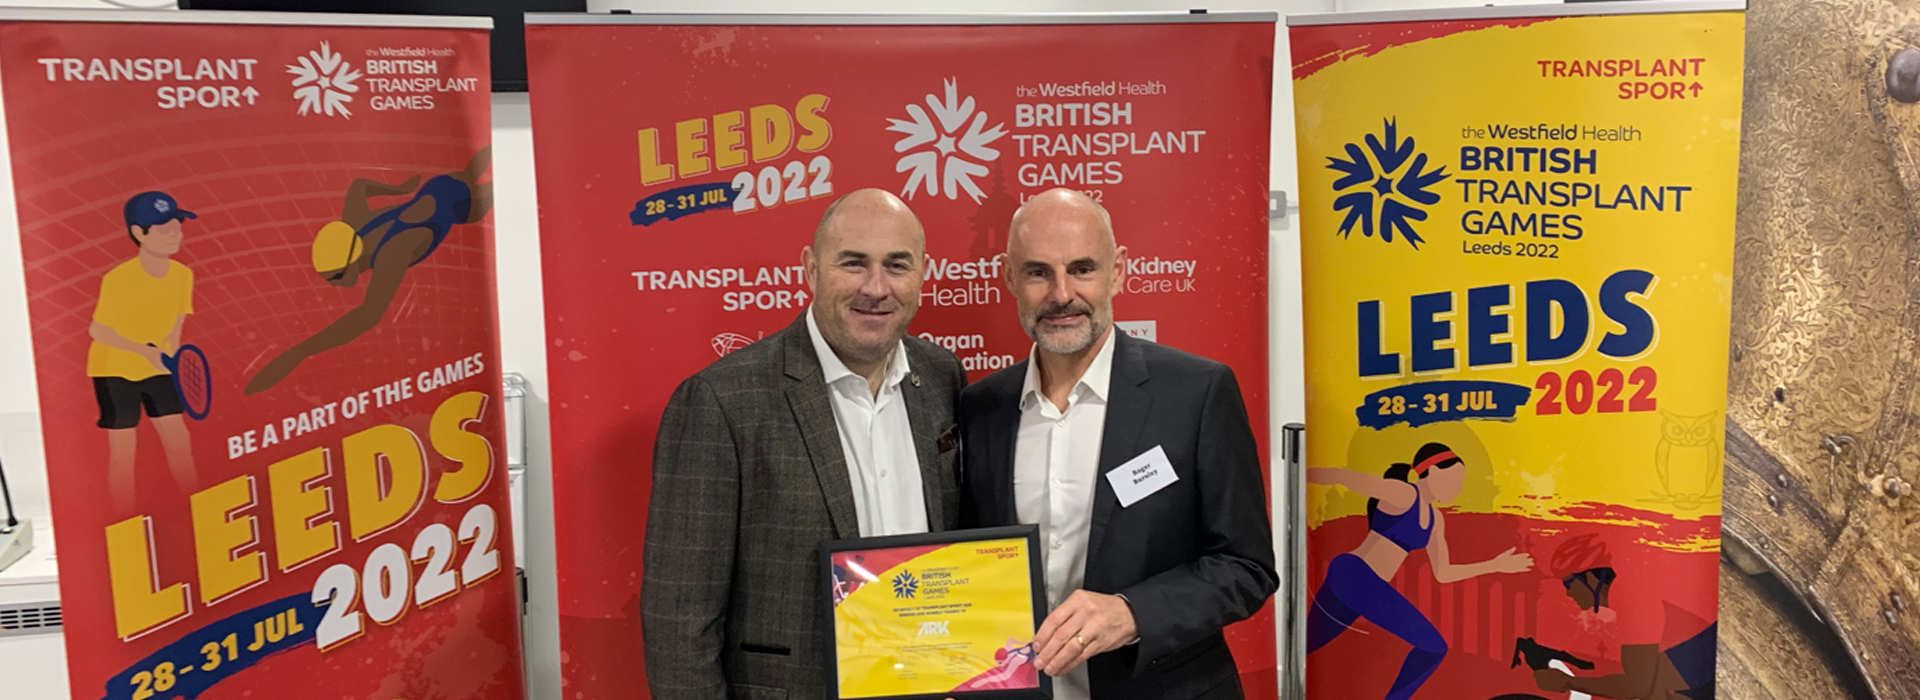 The British Transplant Games - Leeds: A Celebration of Life